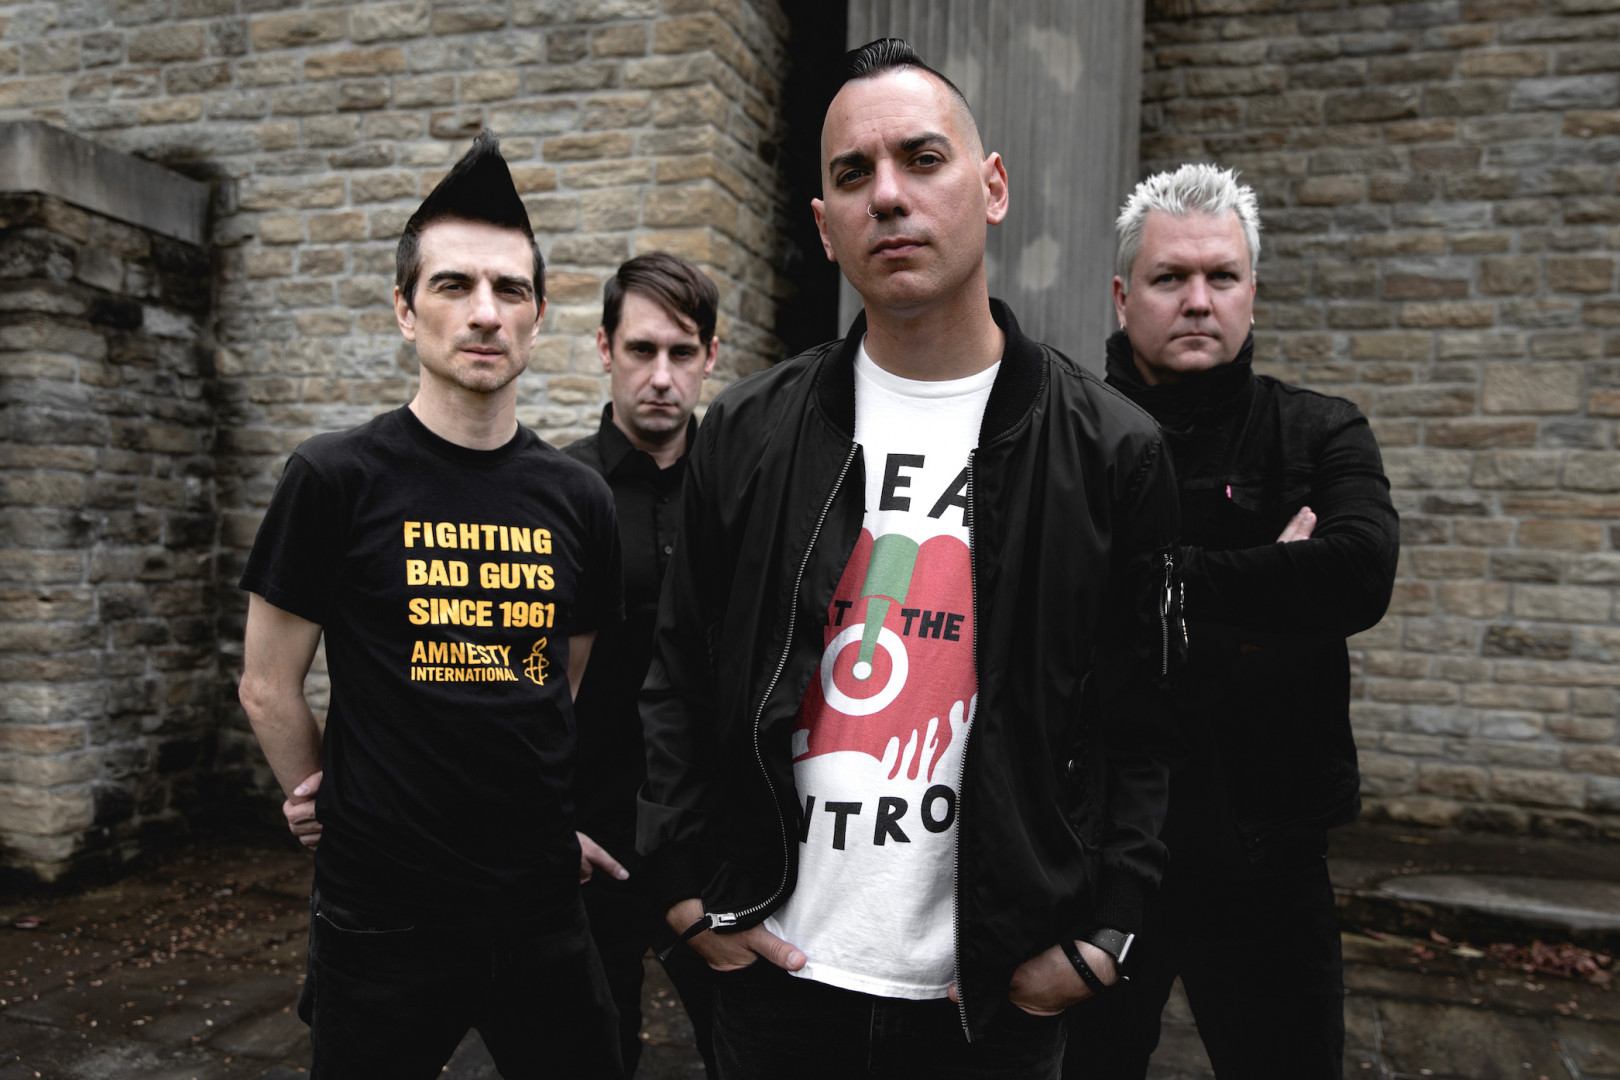 Anti-Flag: "Imperialism (feat. Ashrita Kumar of Pinkshift)"